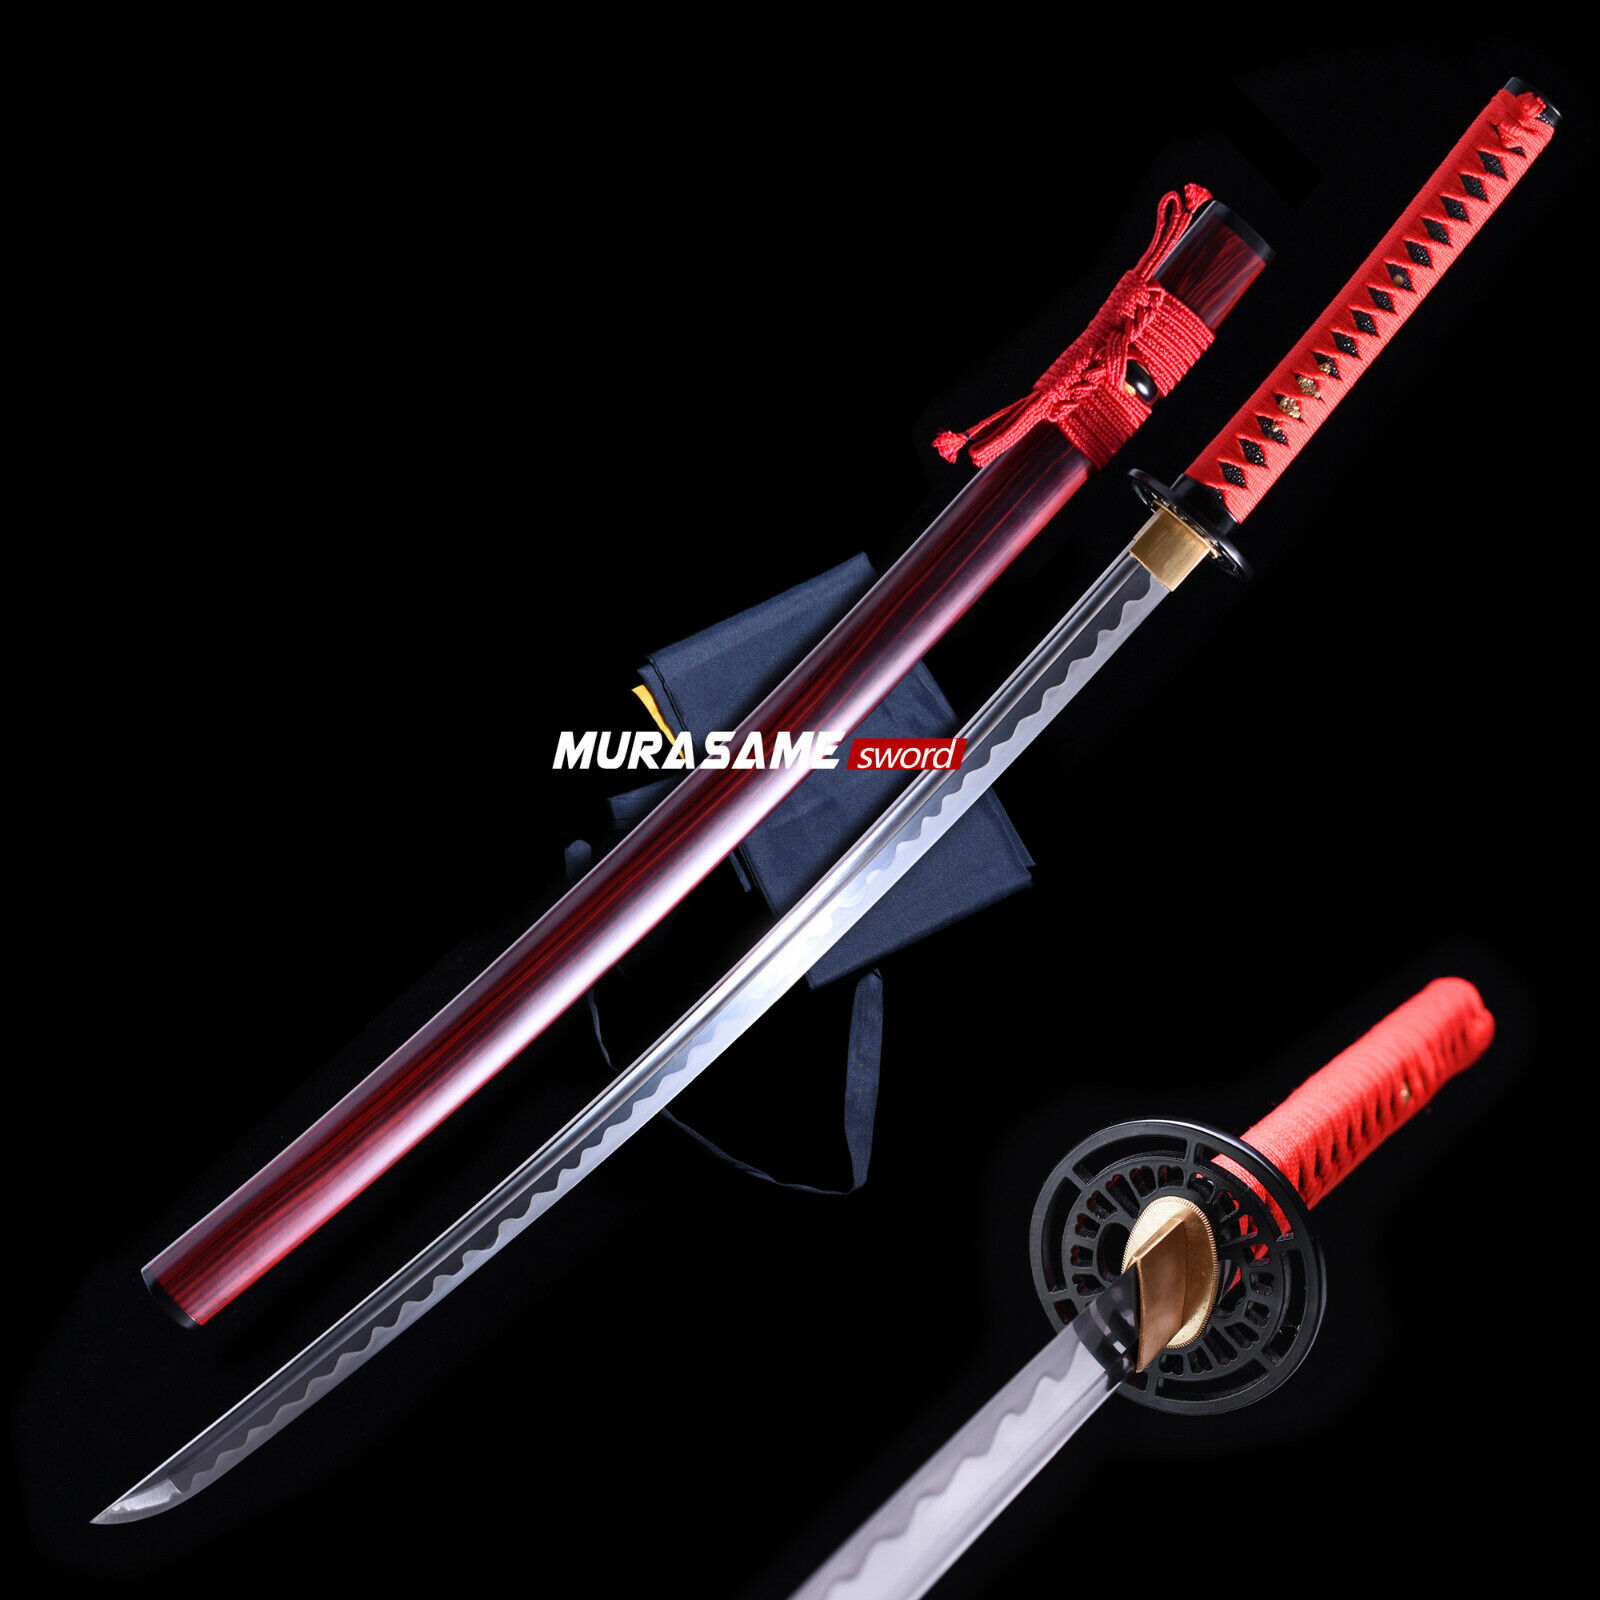 Katana Sword Real High Performance 9260 Steel Blade Very Sharp Battle Ready New